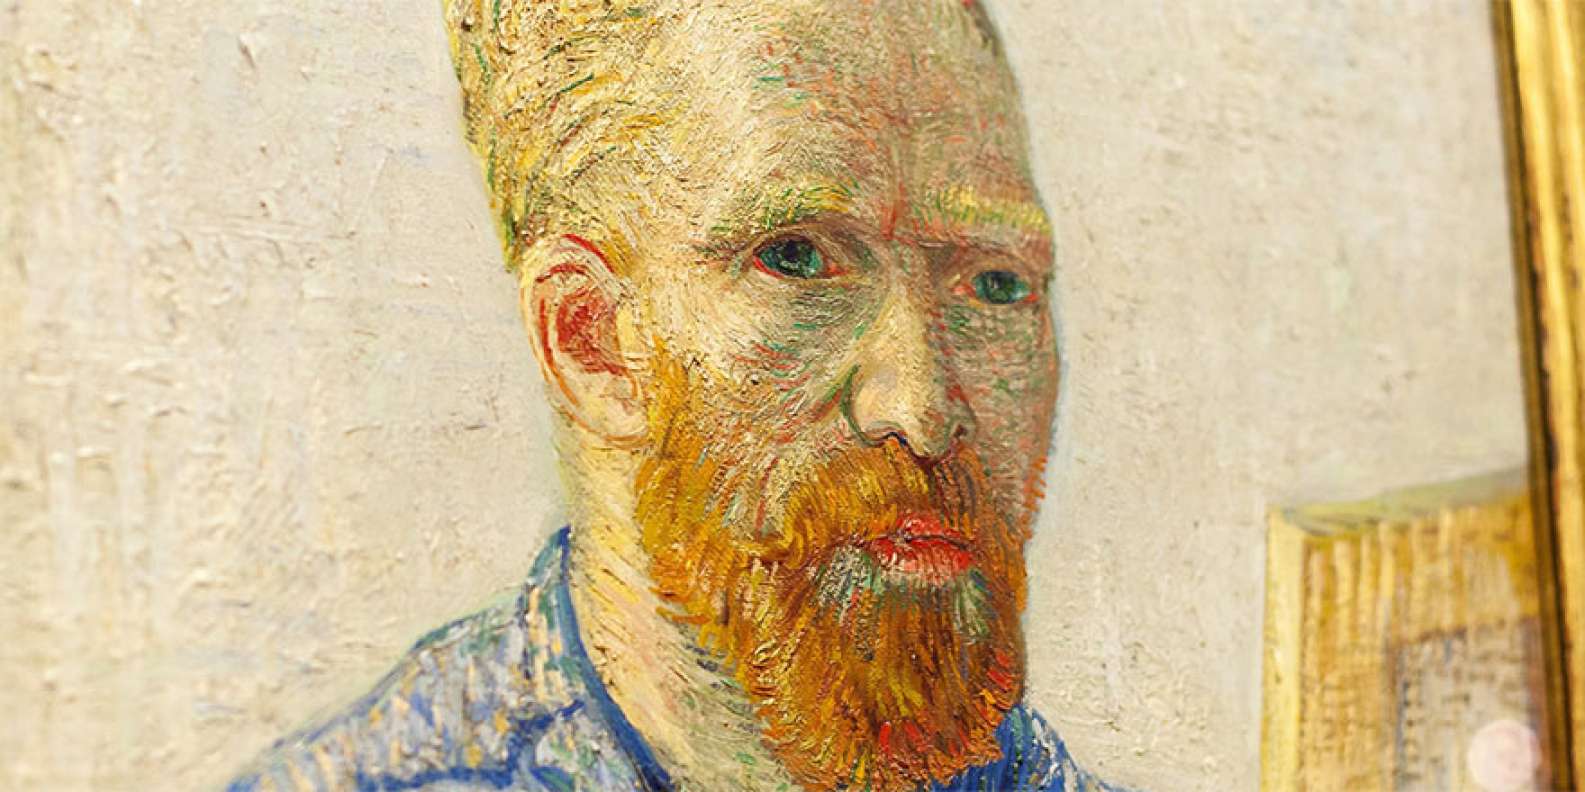 Vincent van Gogh - Van Gogh Museum